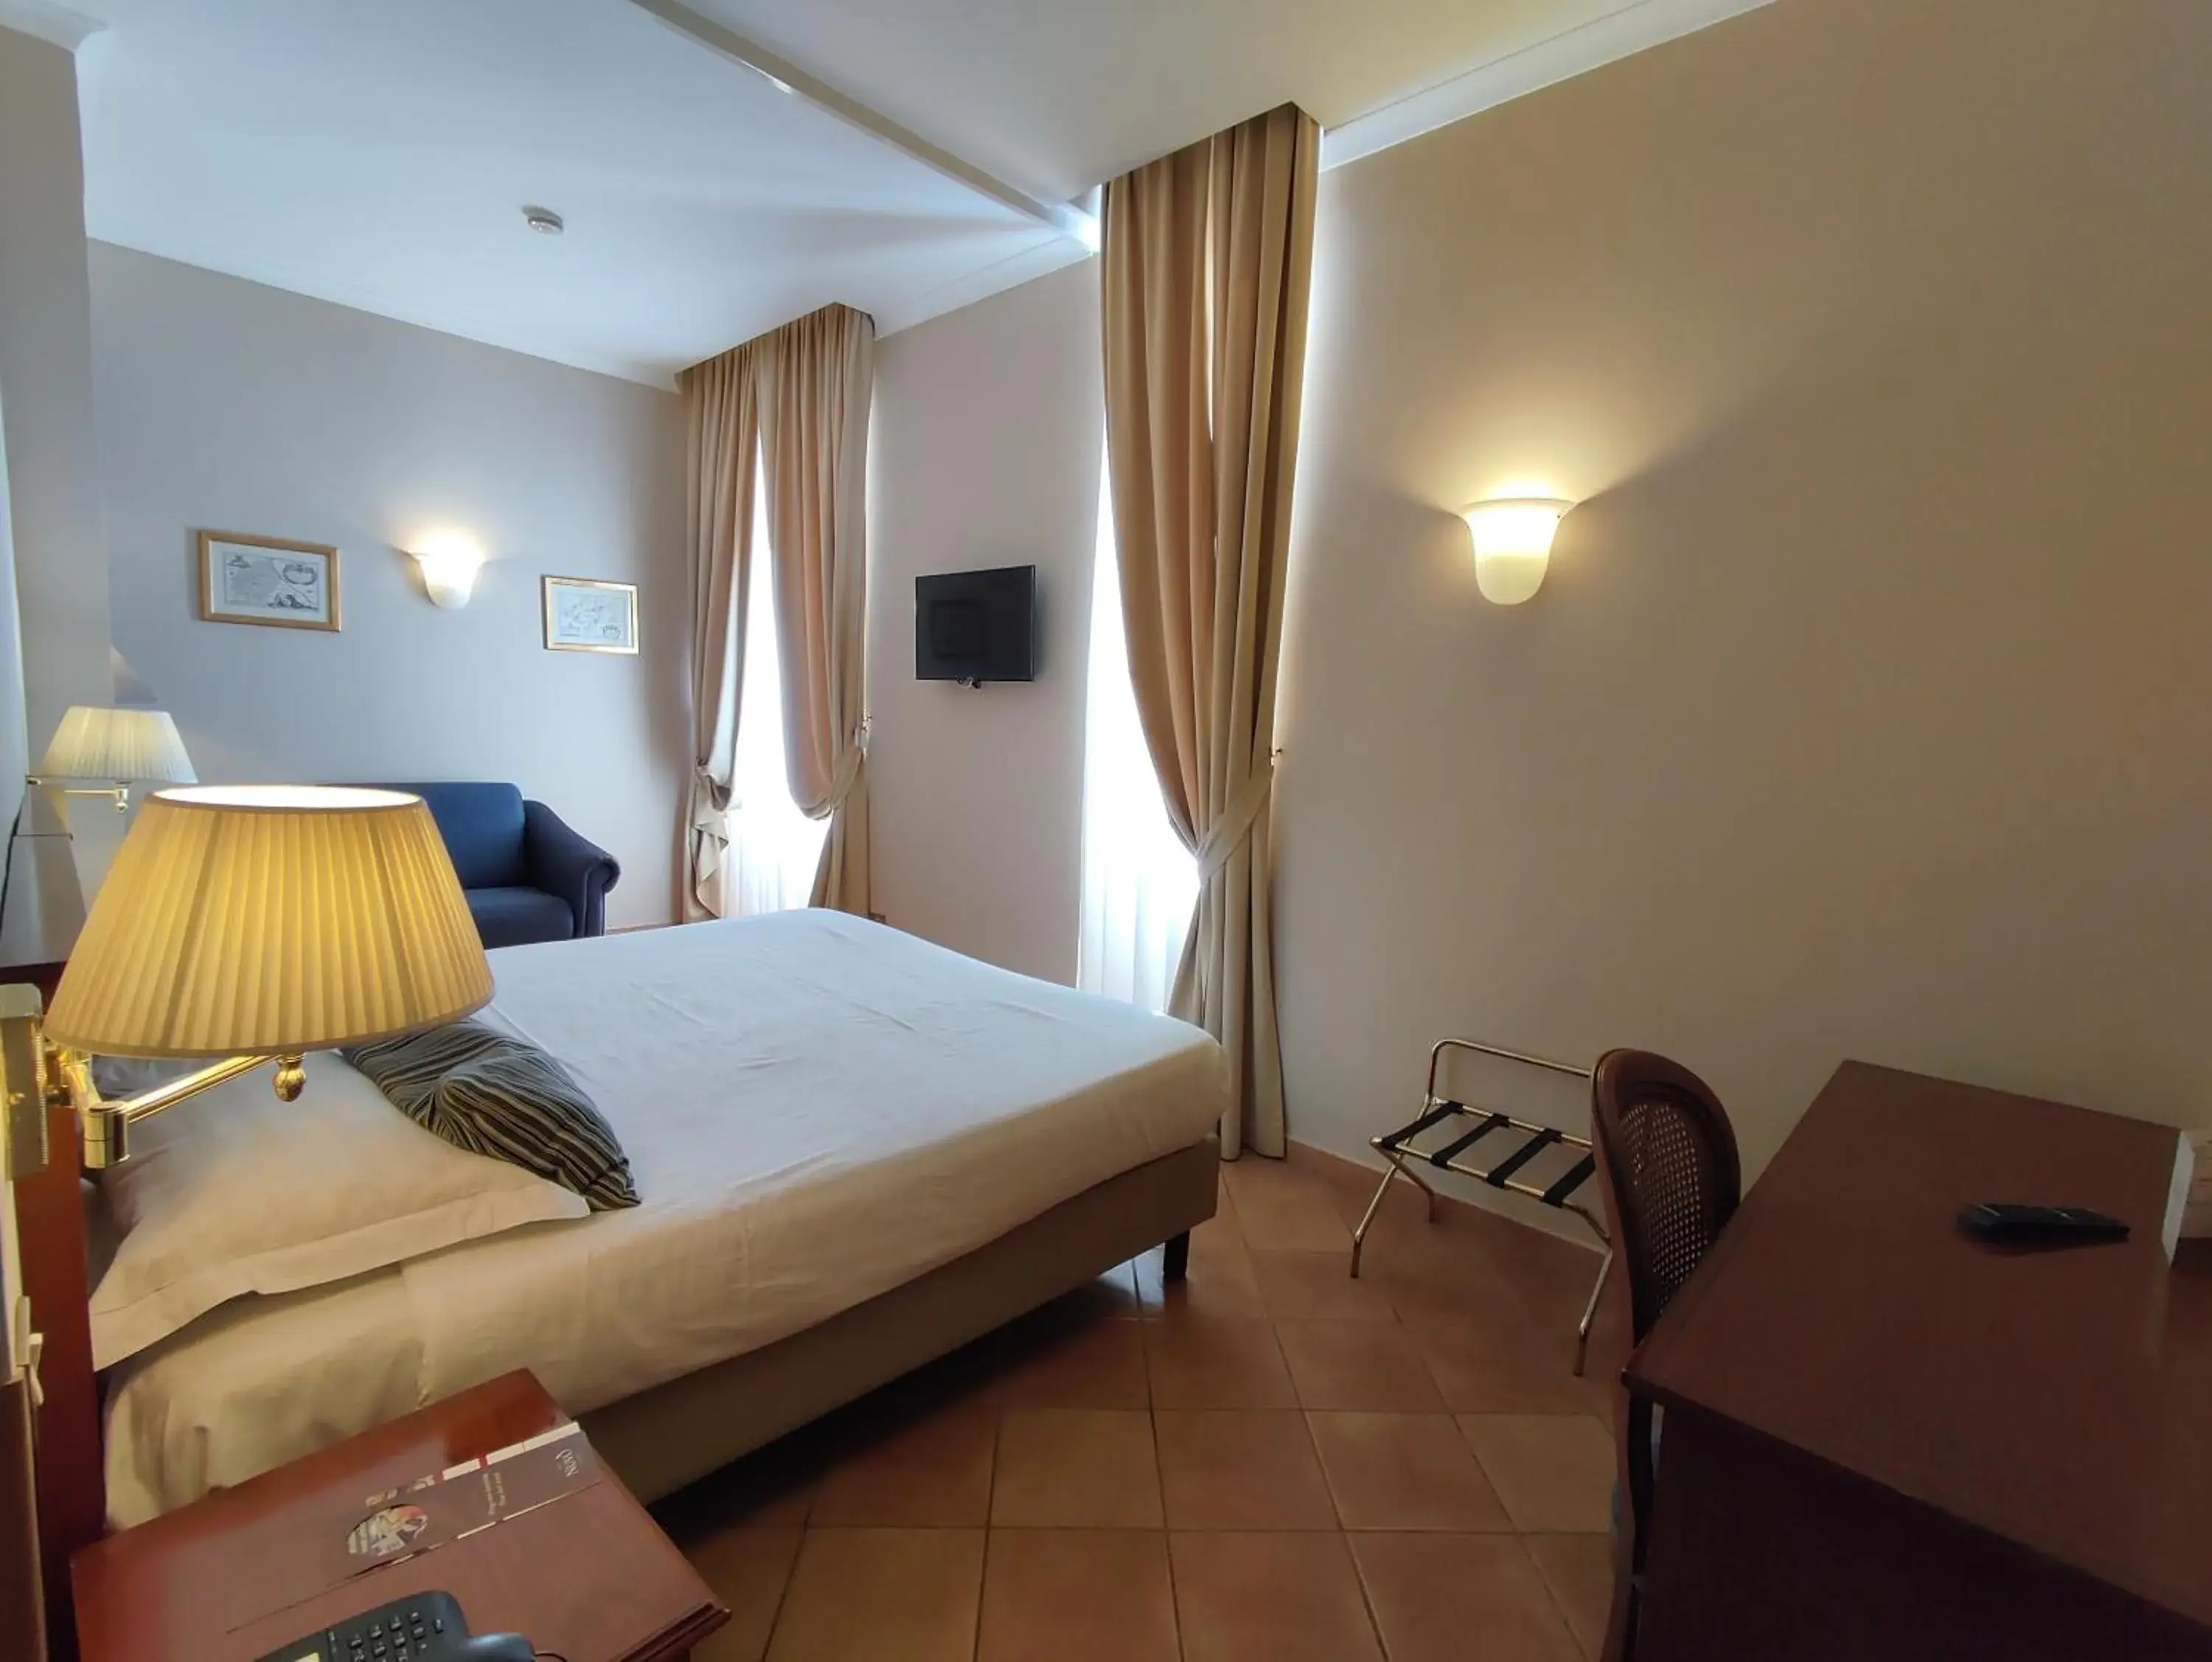 Bedroom, Bed in Hotel Nuvò